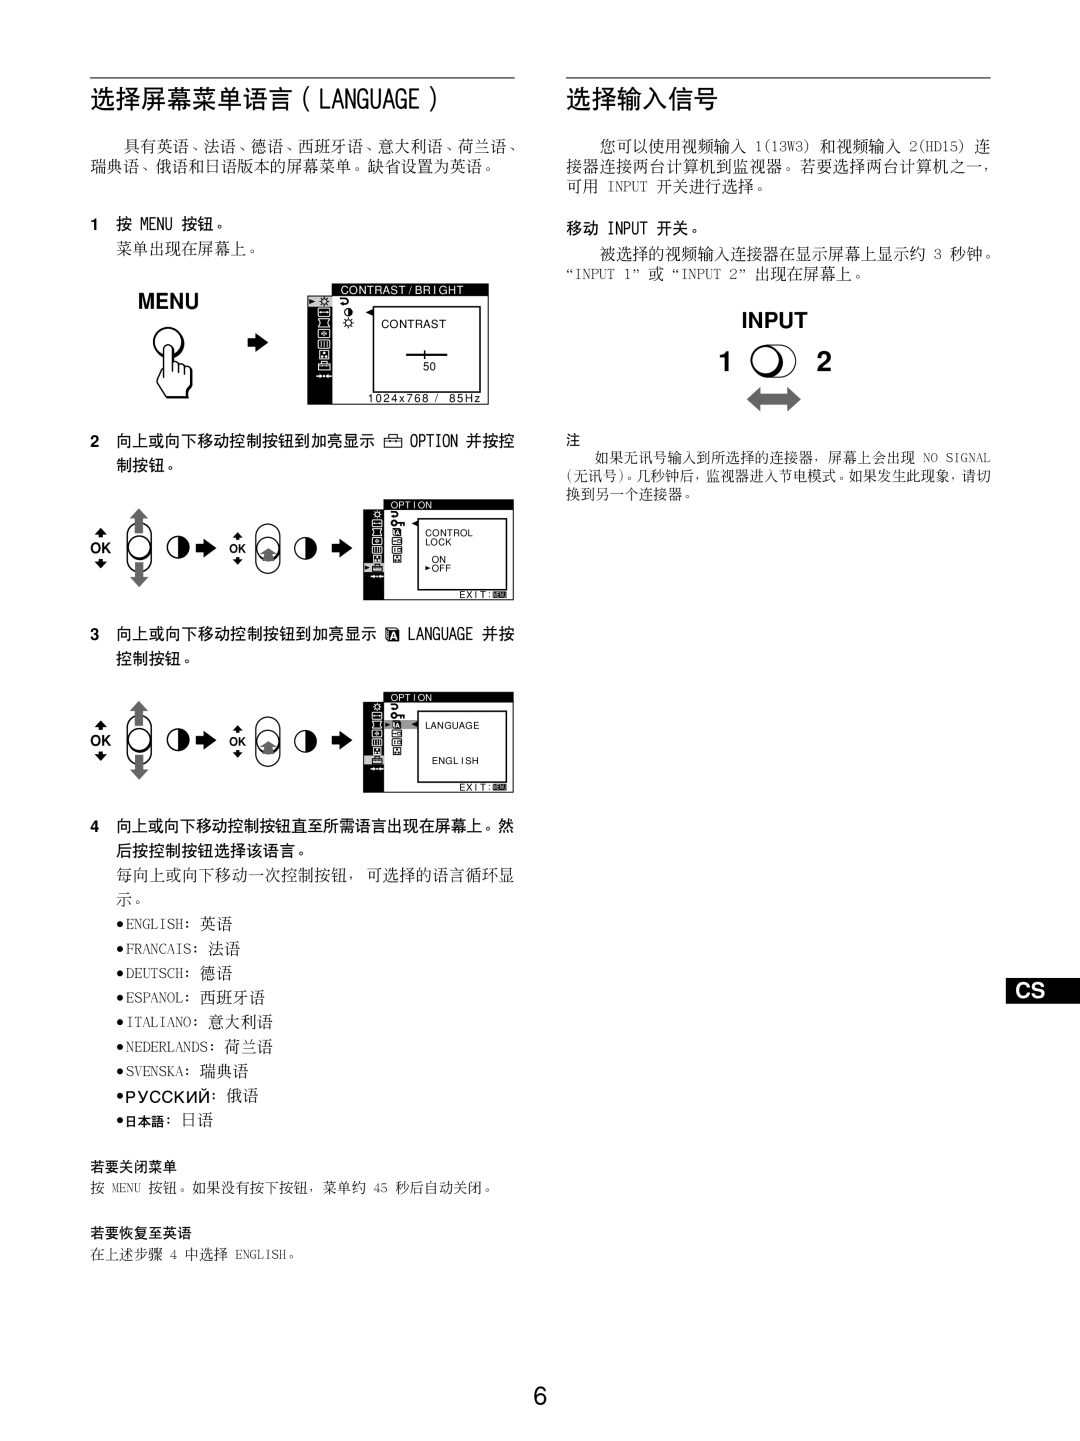 Sony GDM-5510 operating instructions OK b OK b, 选择屏幕菜单语言（Language） 选择输入信号, Menu, Input 